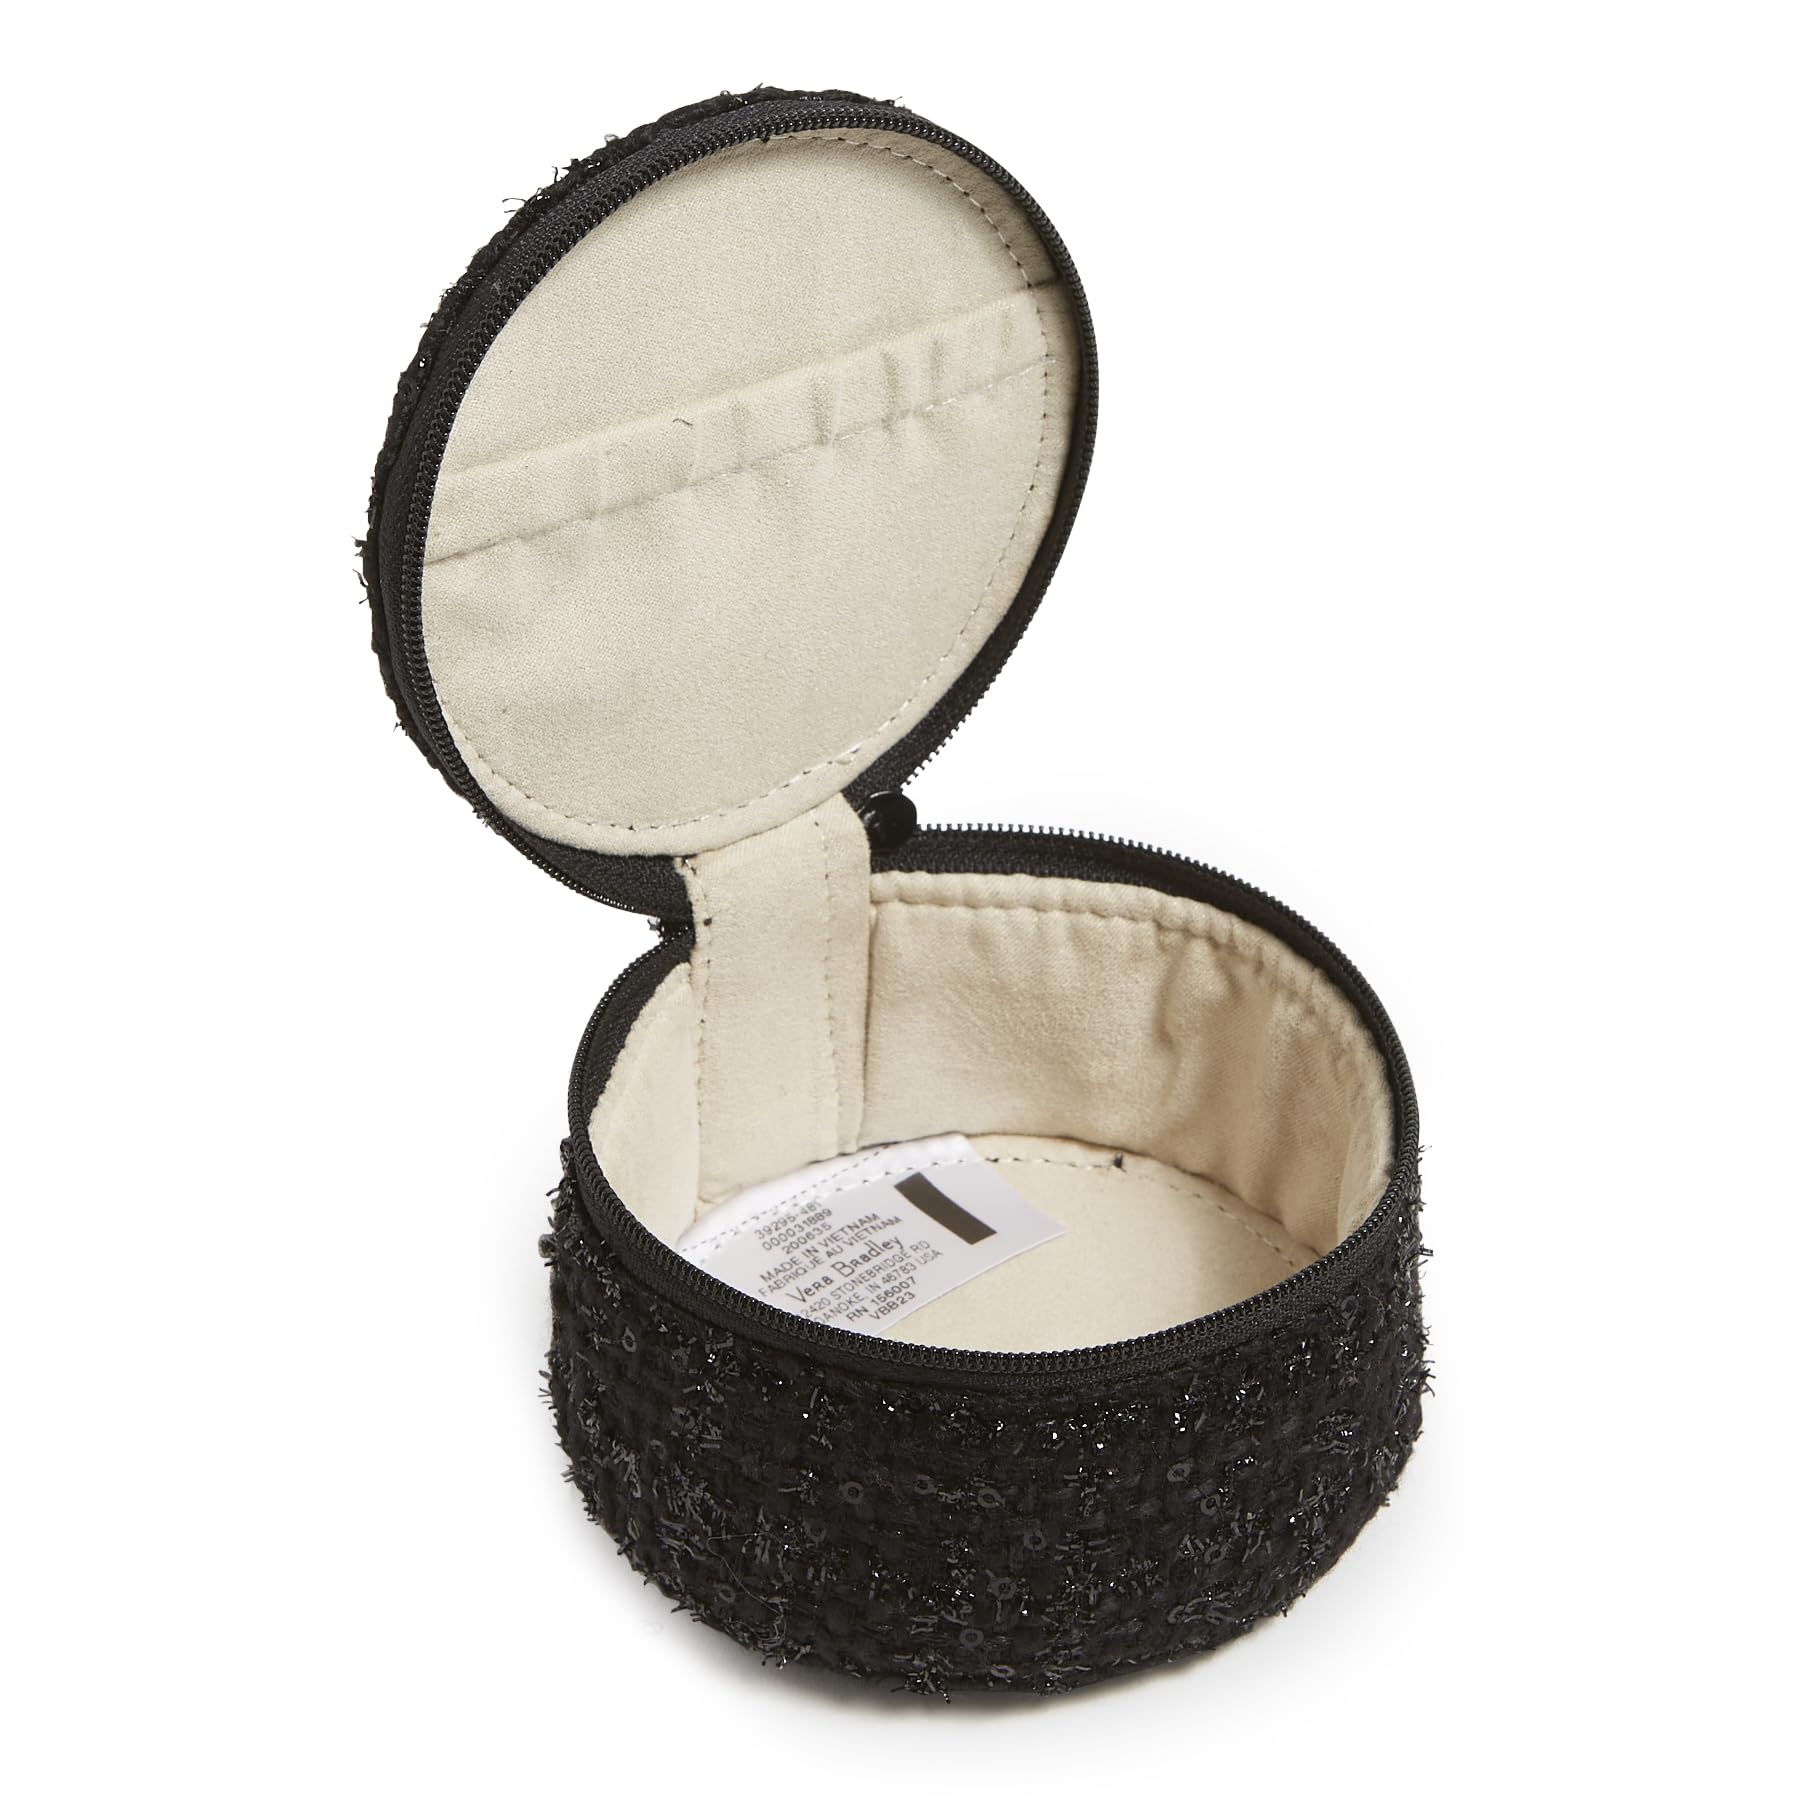 Vera Bradley Women's Round Keepsake Jewelry Organizer Case Travel Accessory, Black, One Size